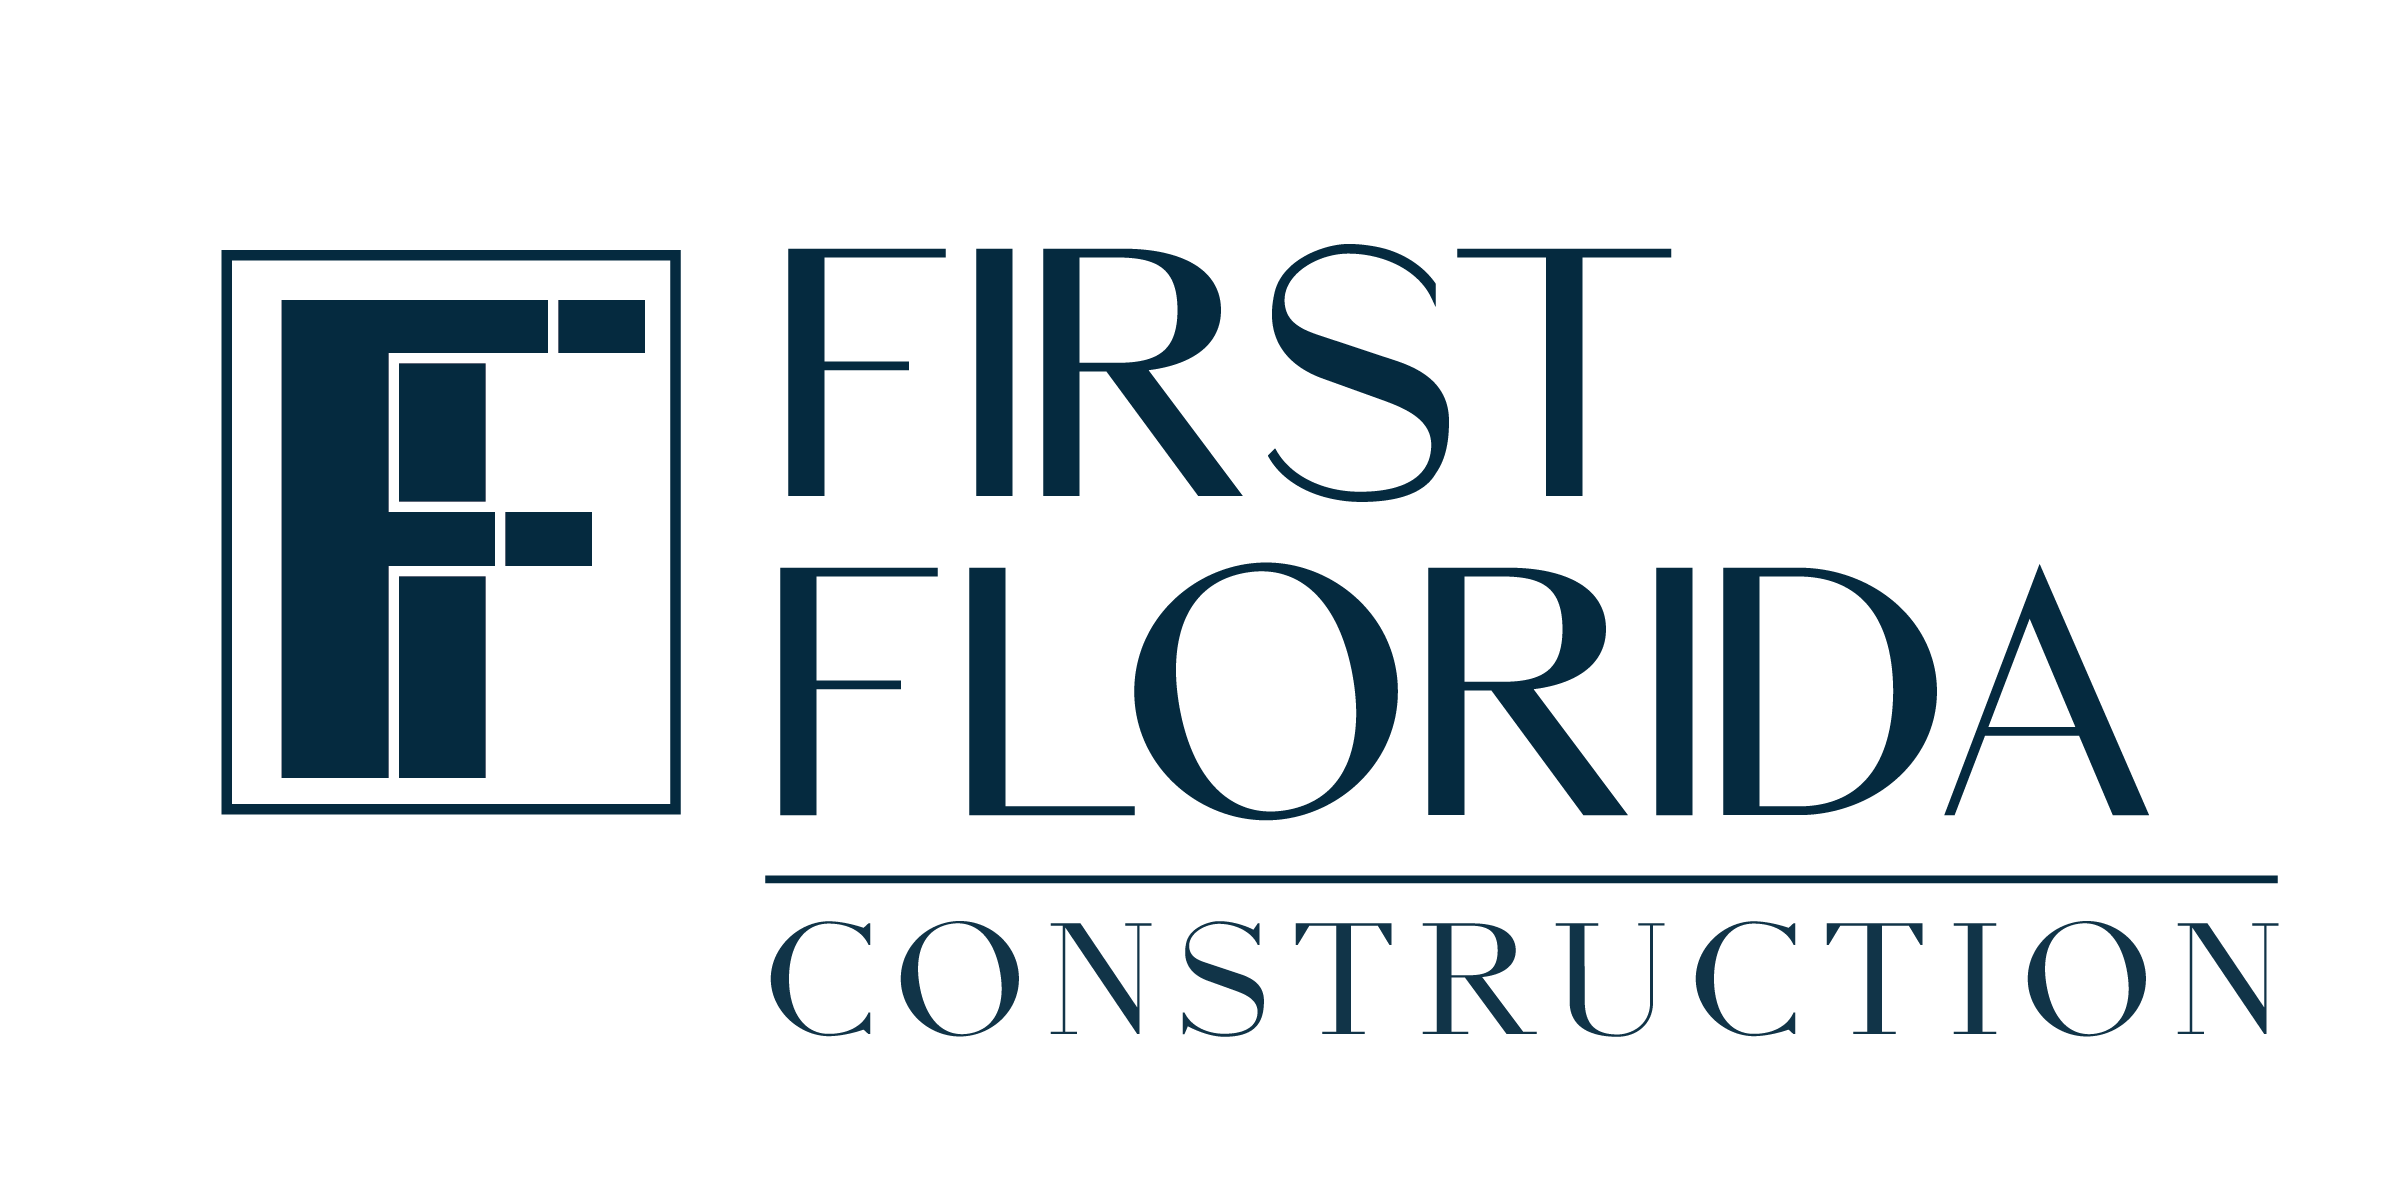 FIRST FLORIDA